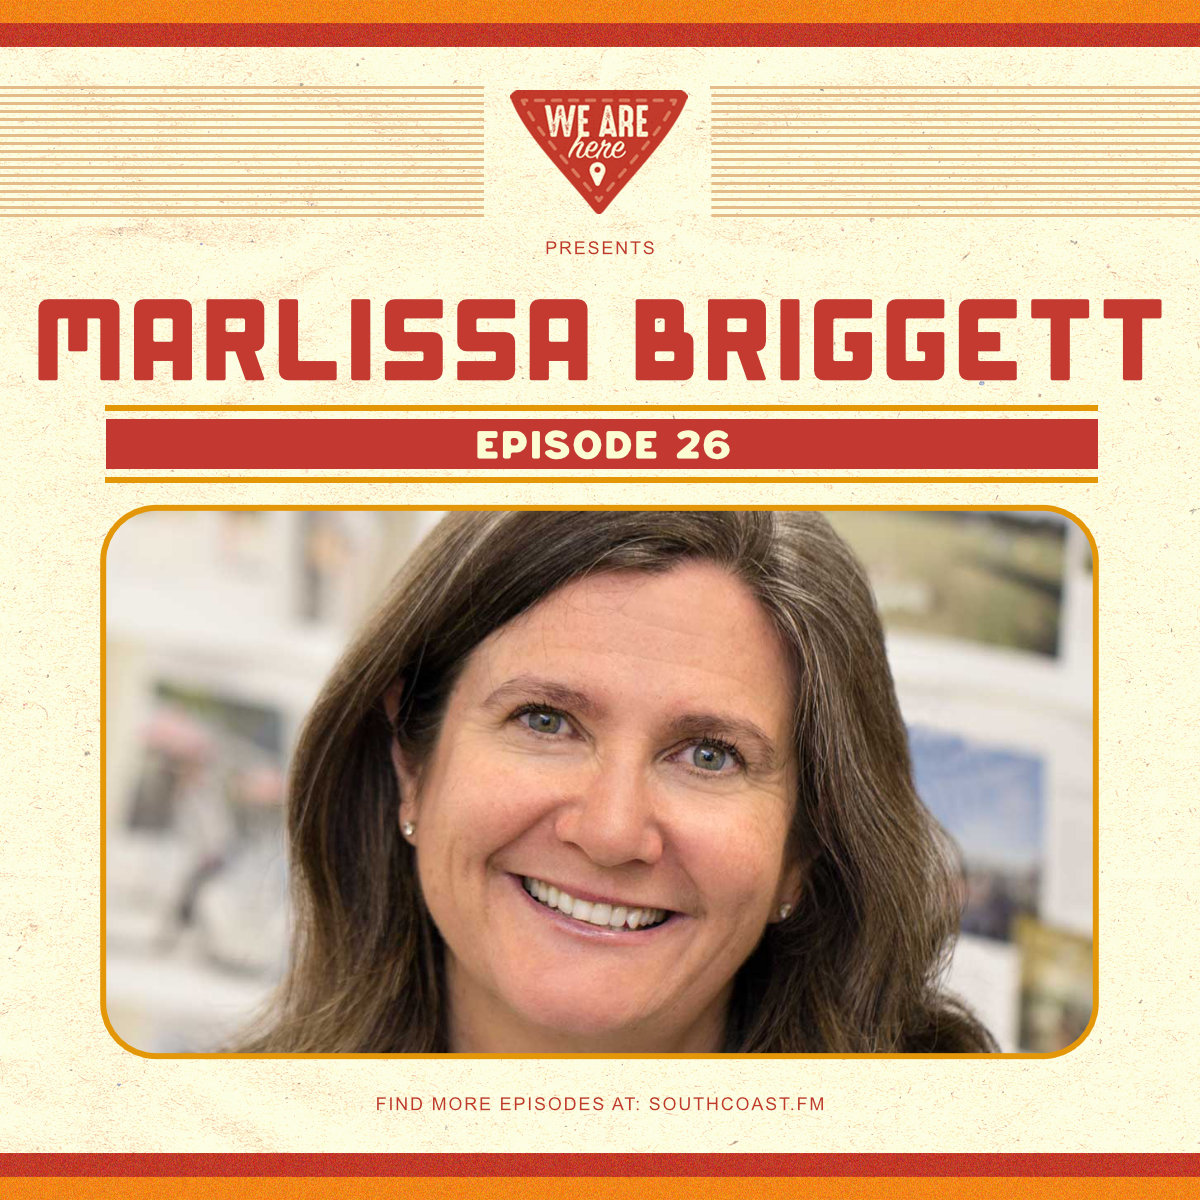 South Coast Almanac's Marlissa Briggett